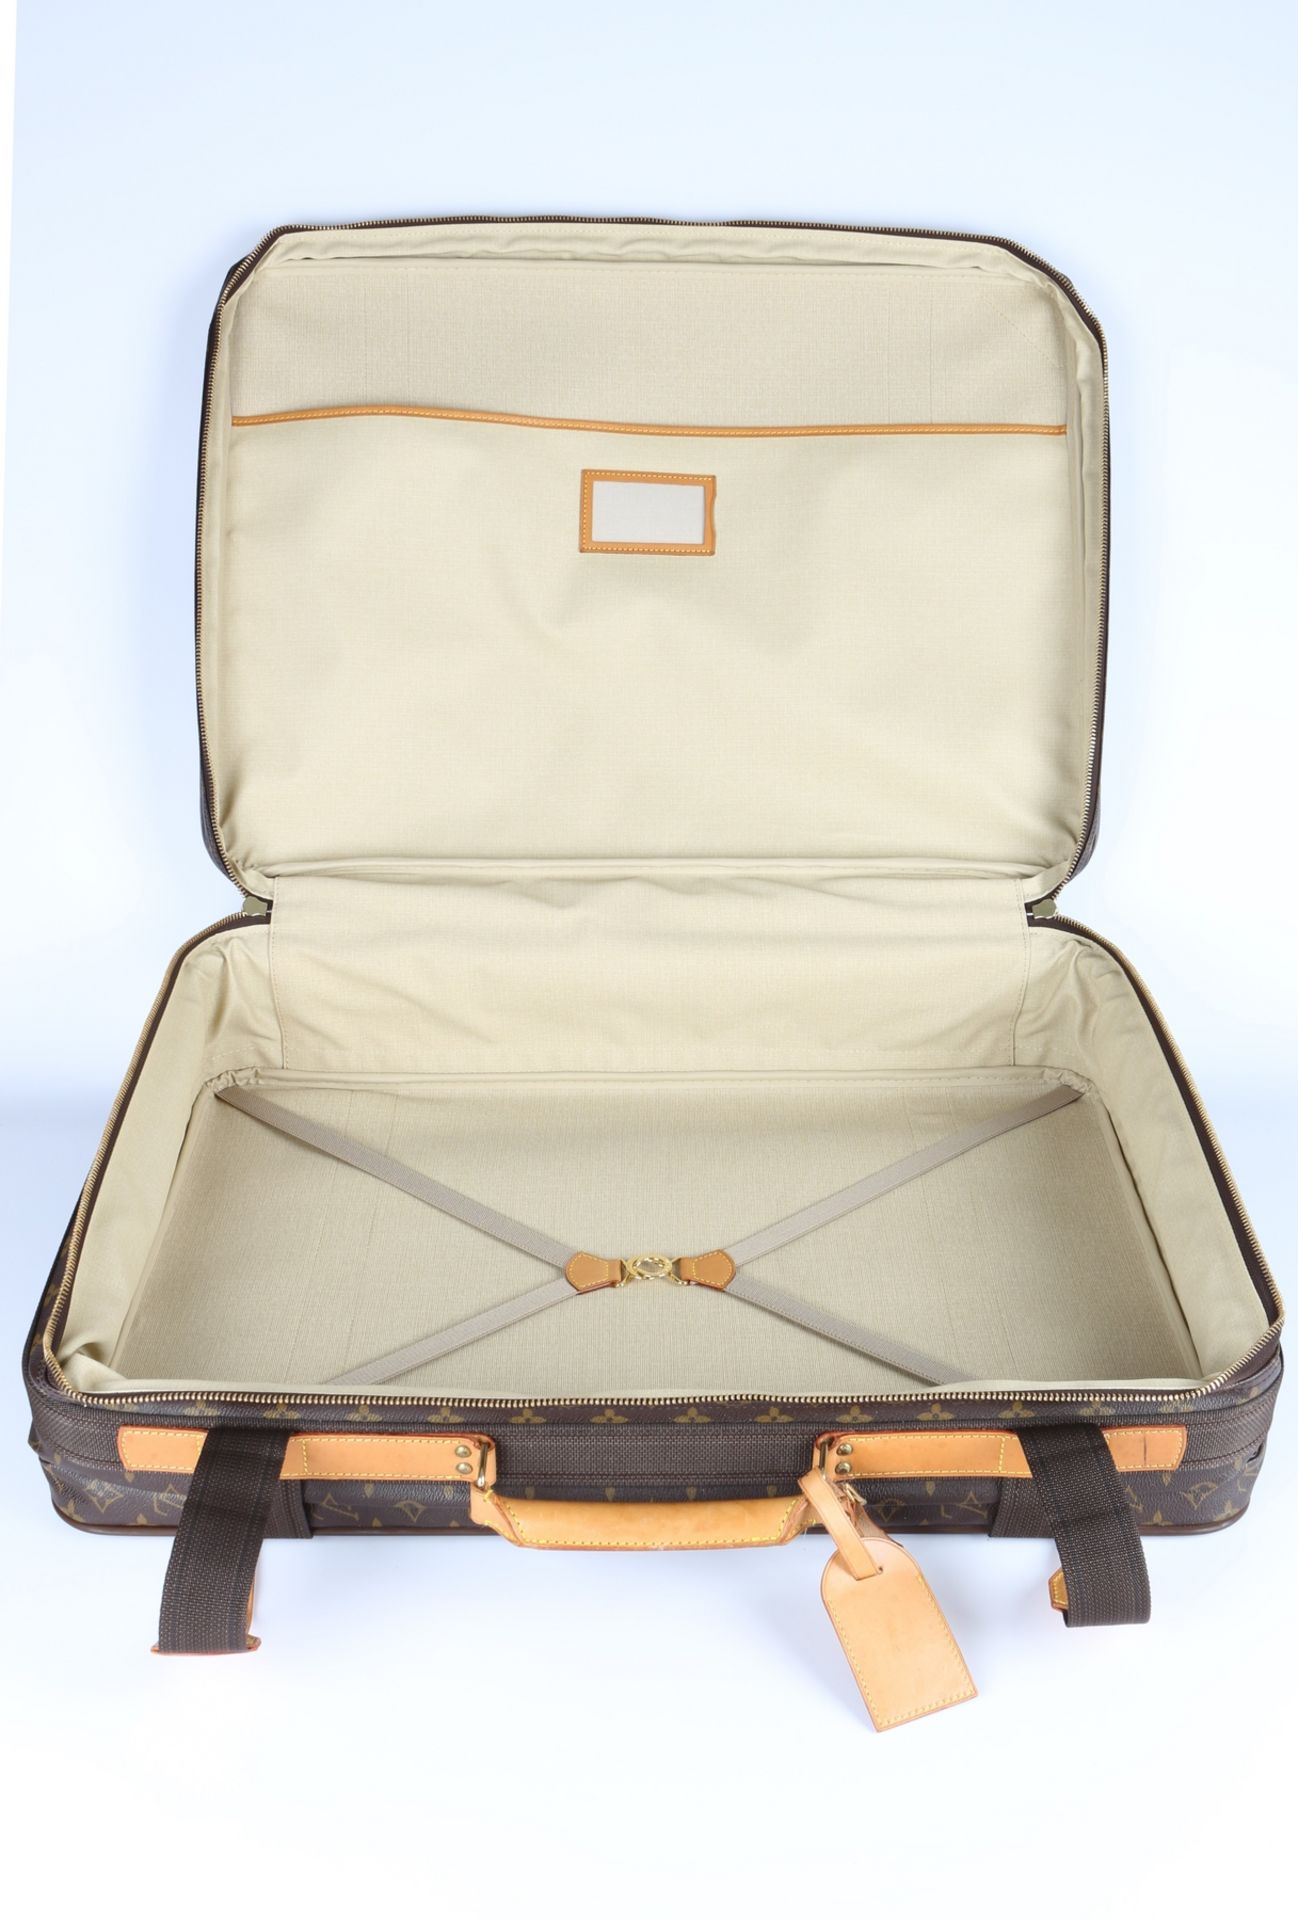 Louis Vuitton Stratos 65 Reisekoffer Monogram Canvas, suitcase, - Image 3 of 8